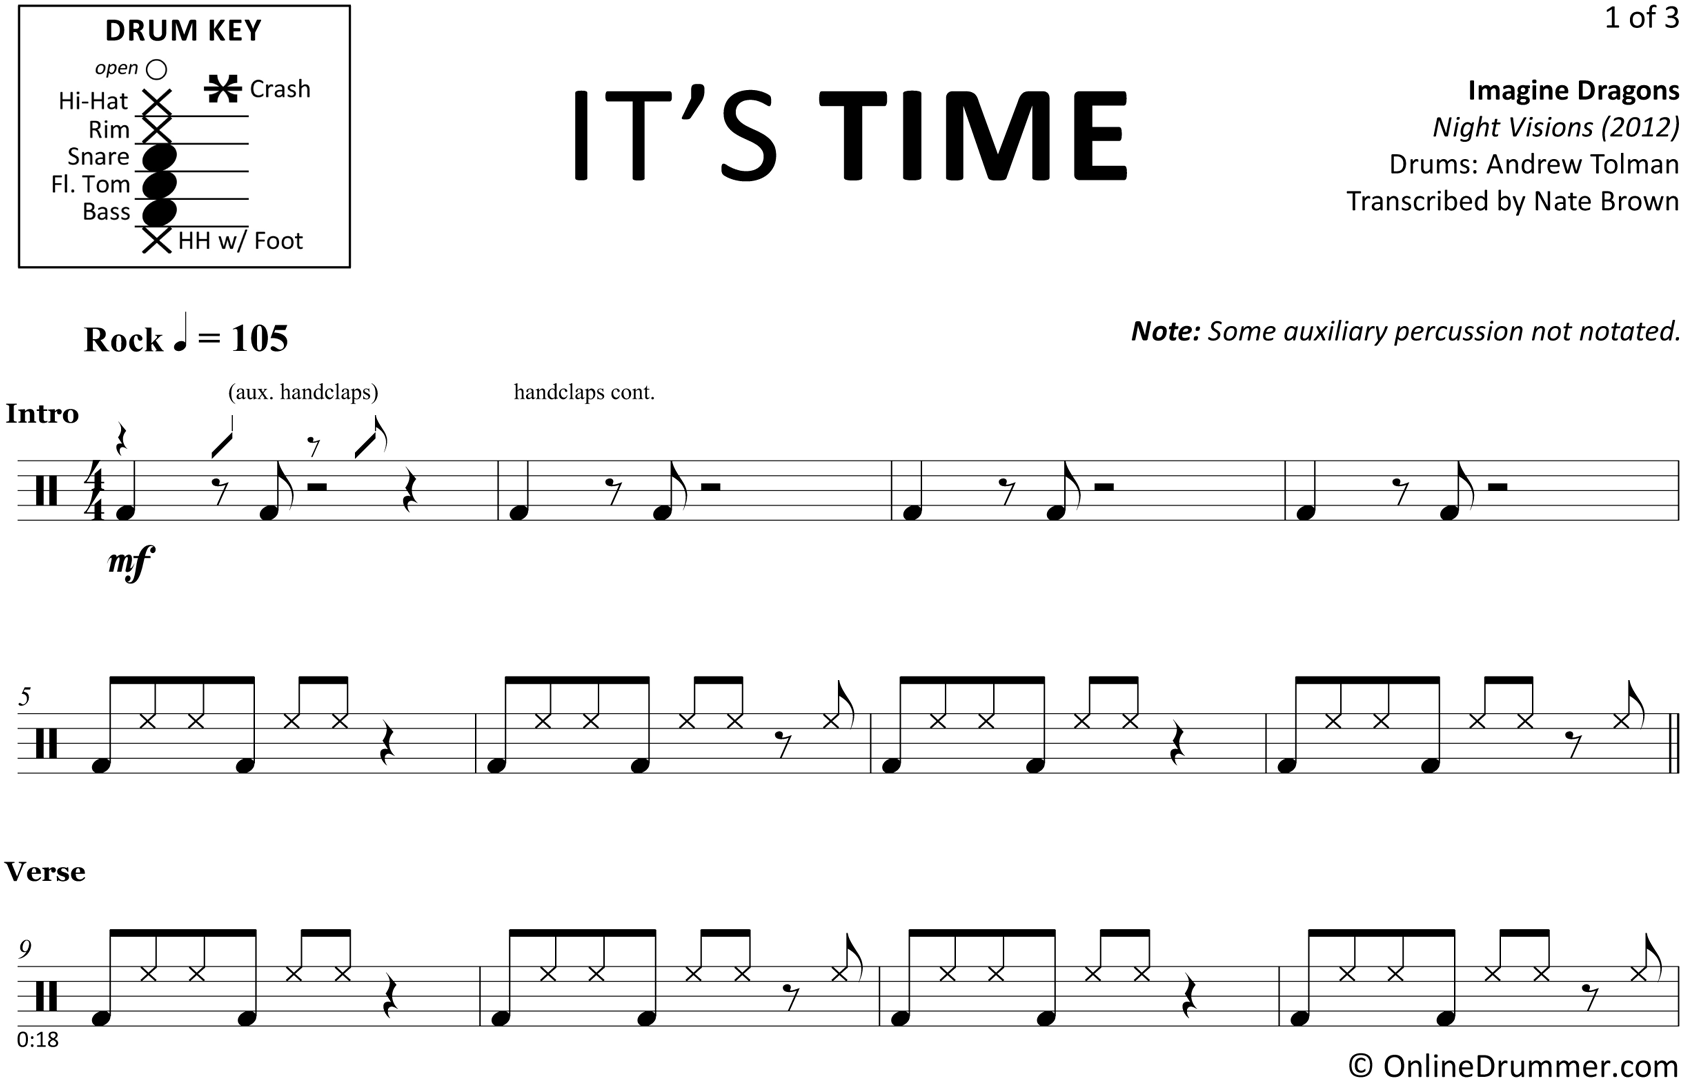 It's Time - Imagine Dragons - Drum Sheet Music